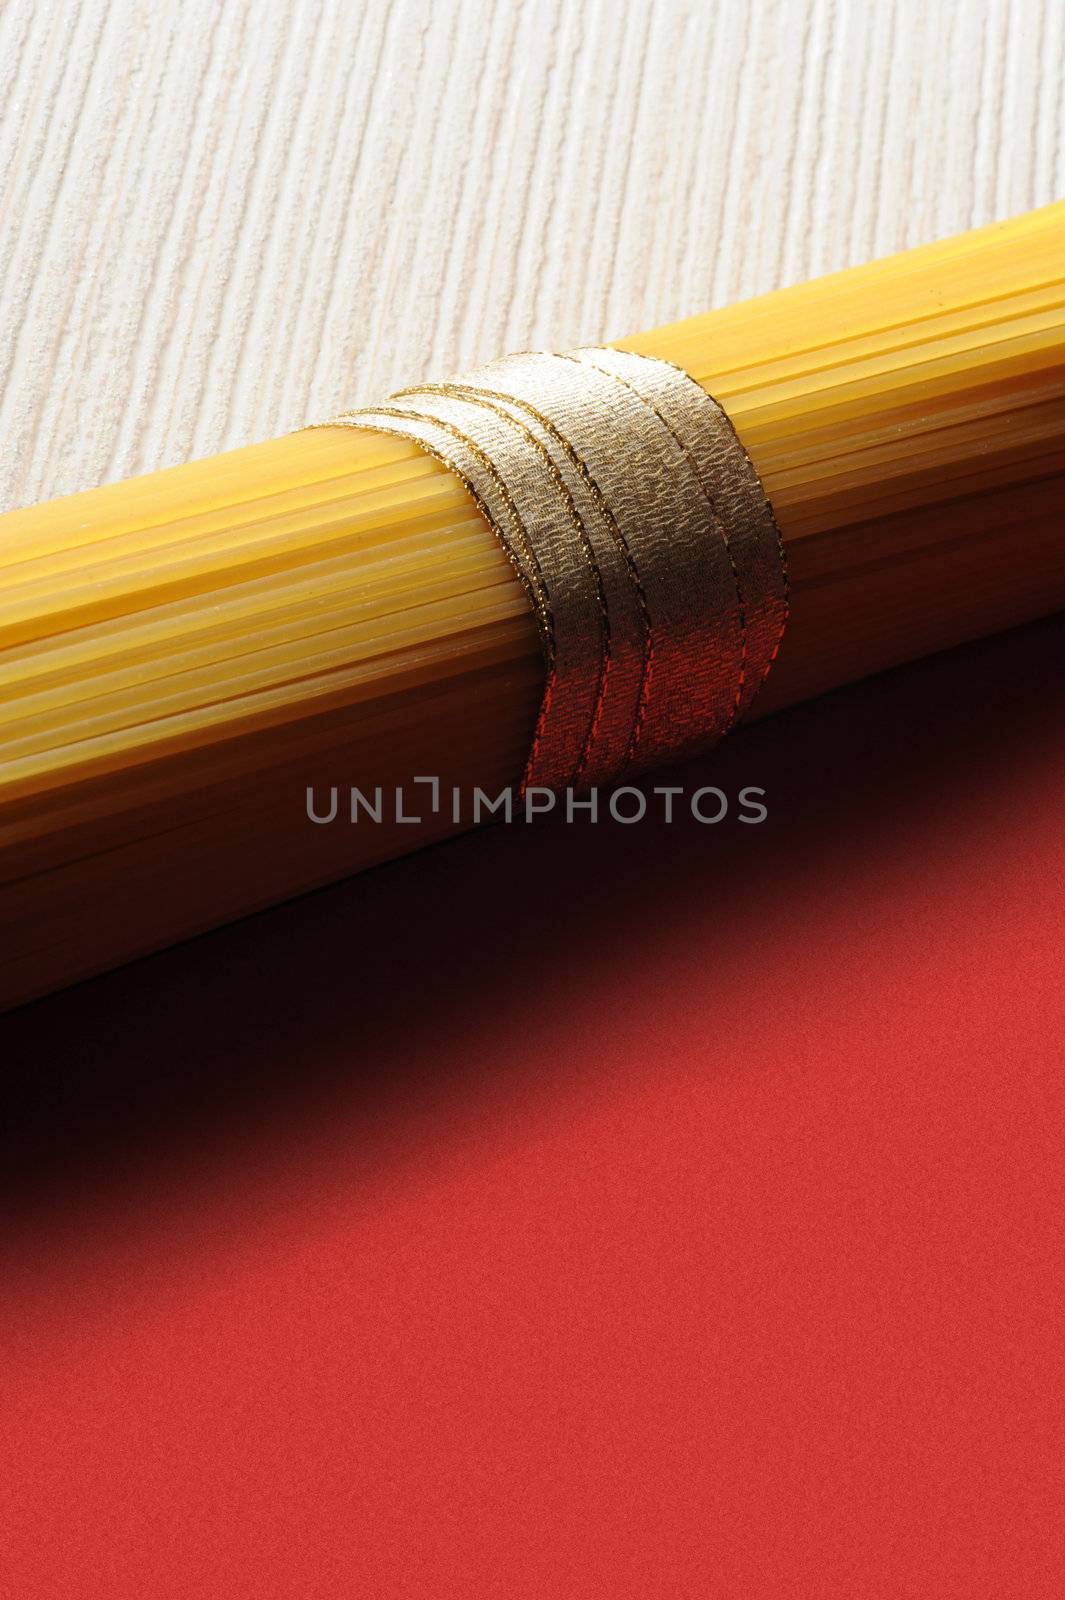 spaghetti, italian pasta: similar picture on my portfolio